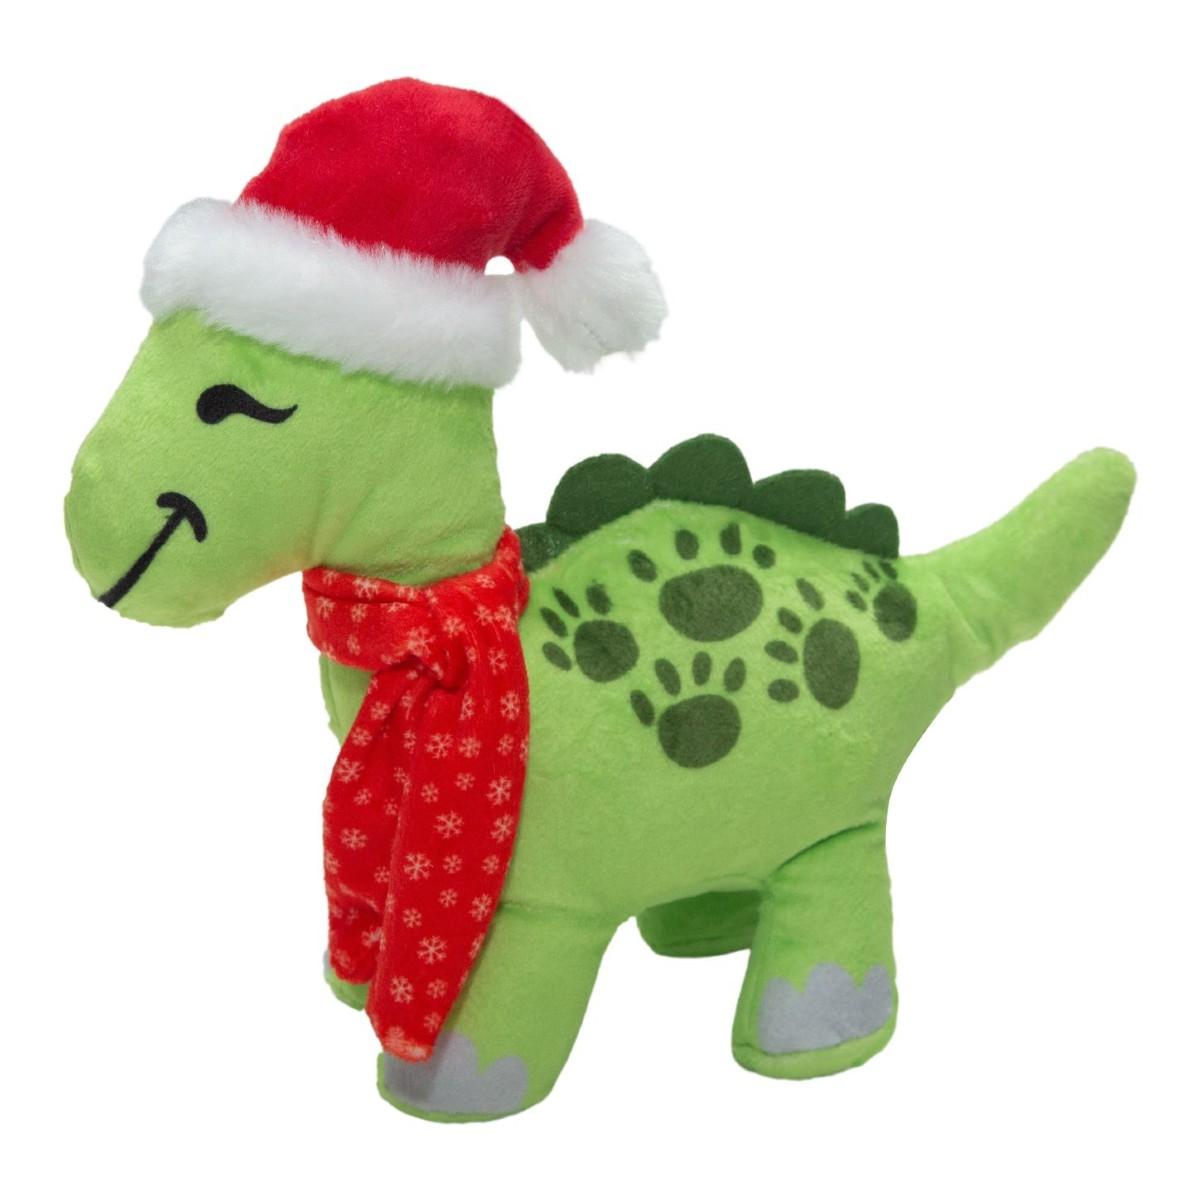 SnugArooz Holiday Dino Plush Dog Toy - Brontosaurus with Santa Hat